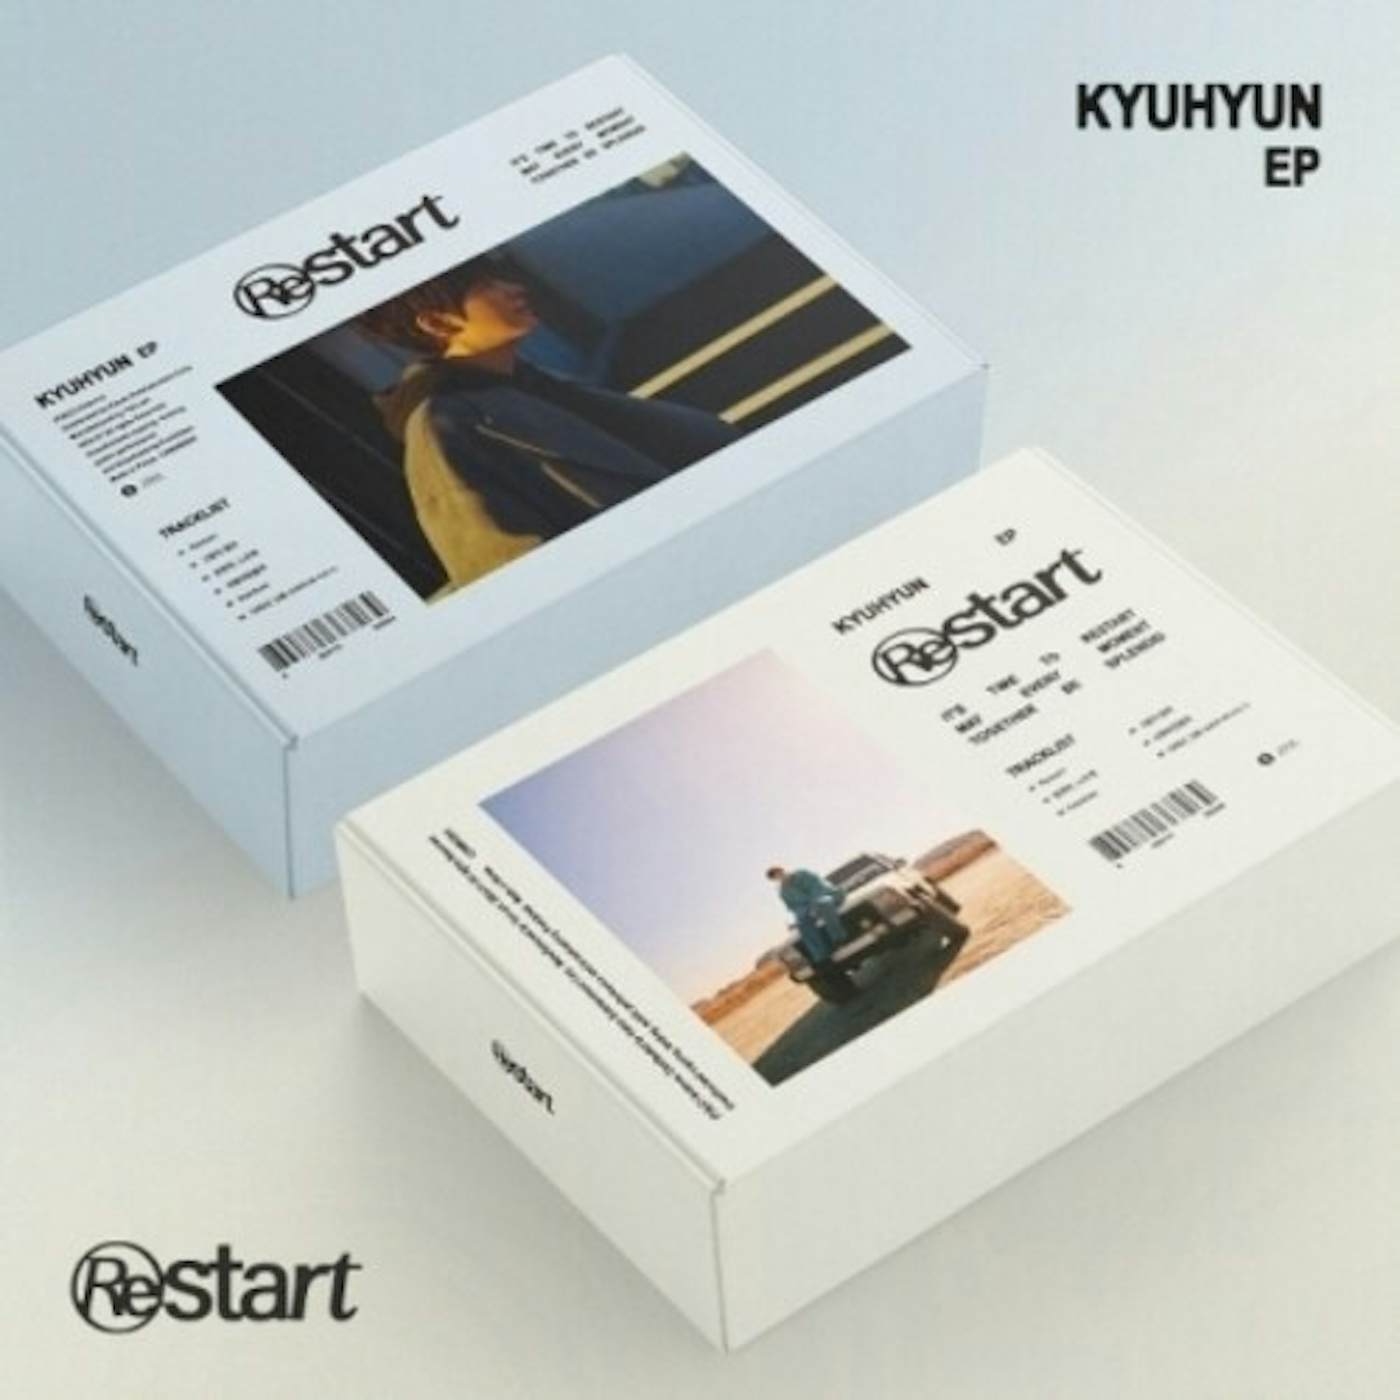 KYUHYUN RESTART CD